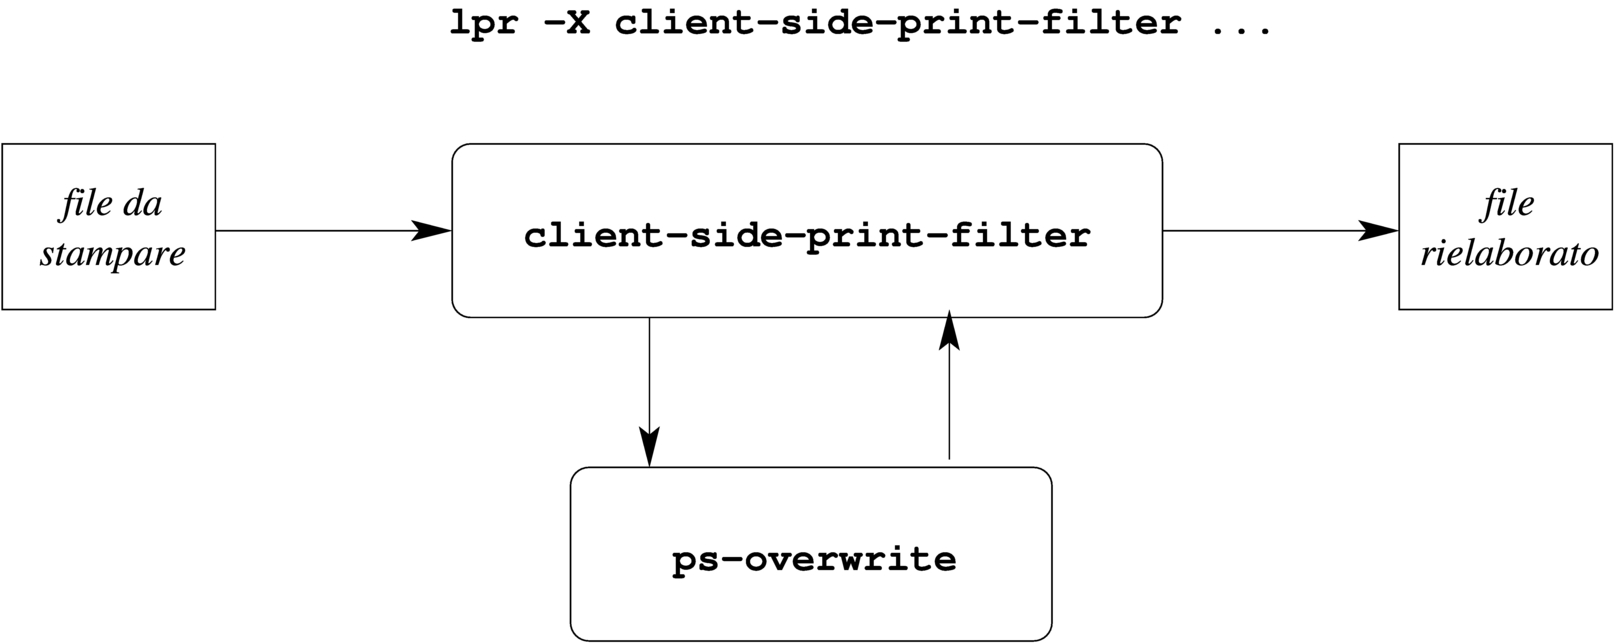 client-side-print-filter